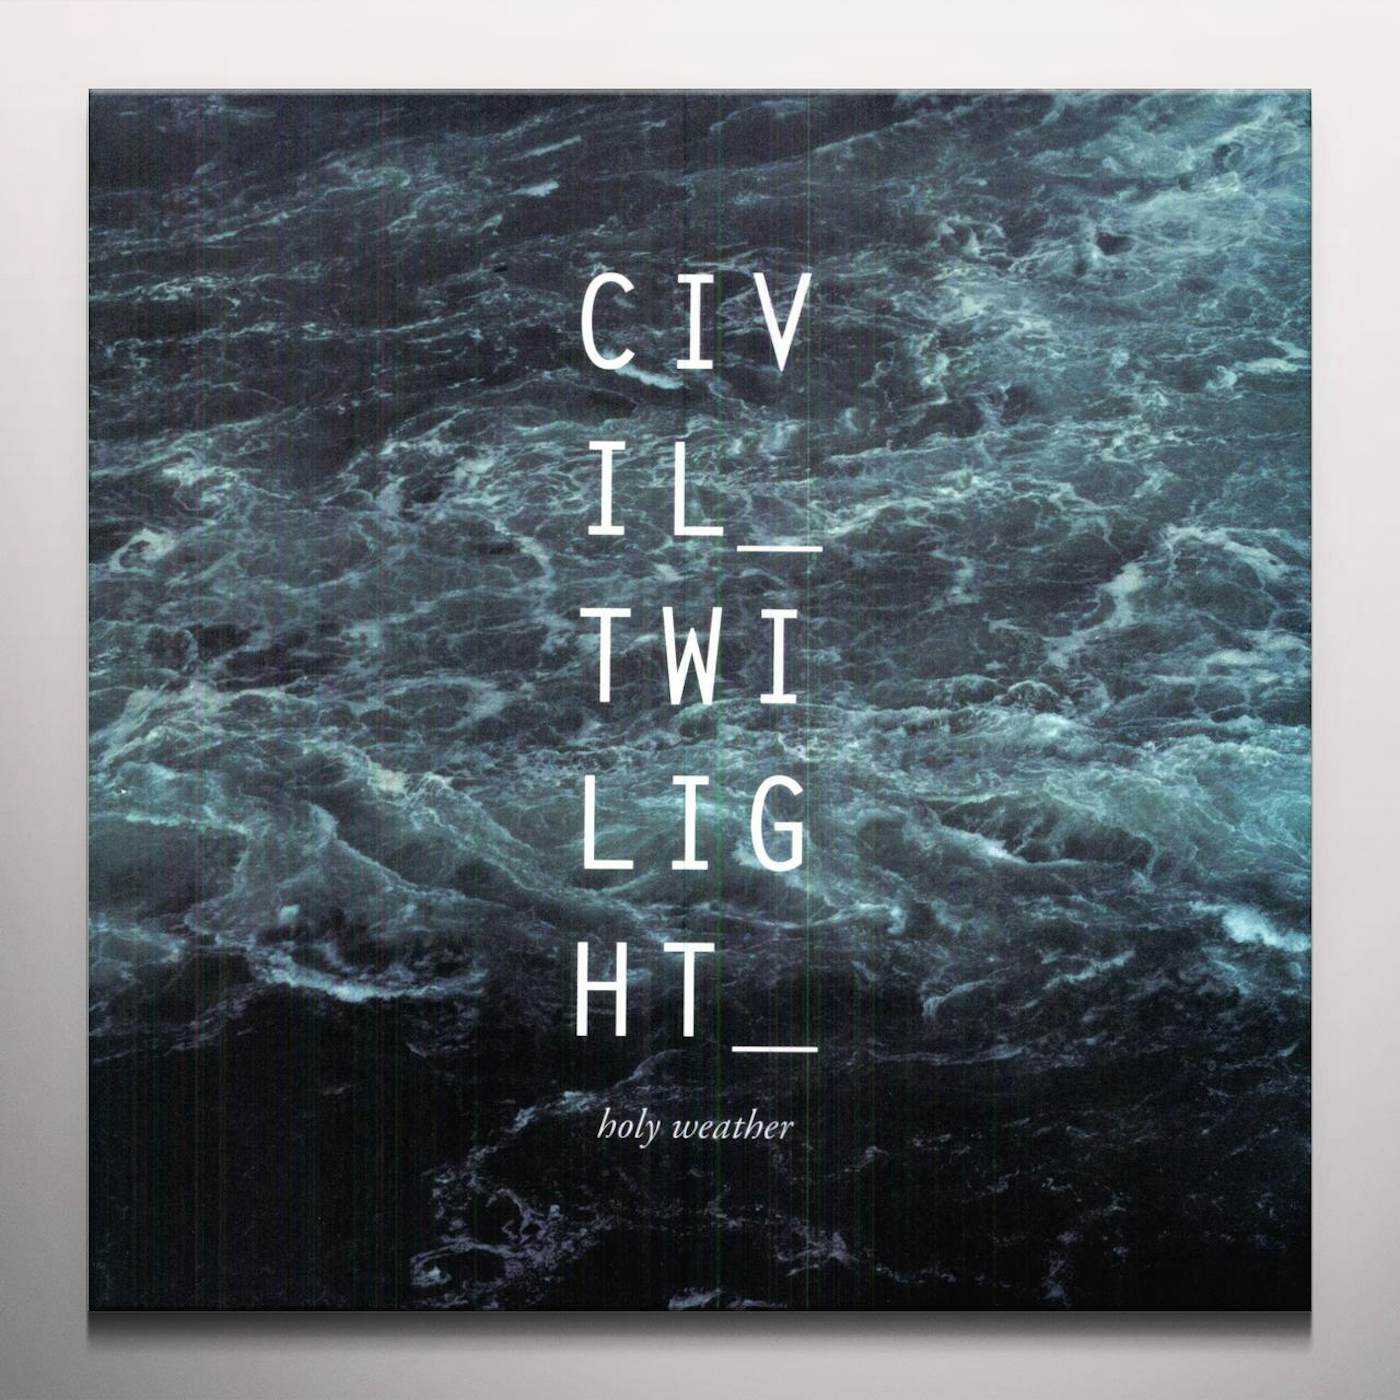 Civil Twilight Holy Weather Vinyl Record